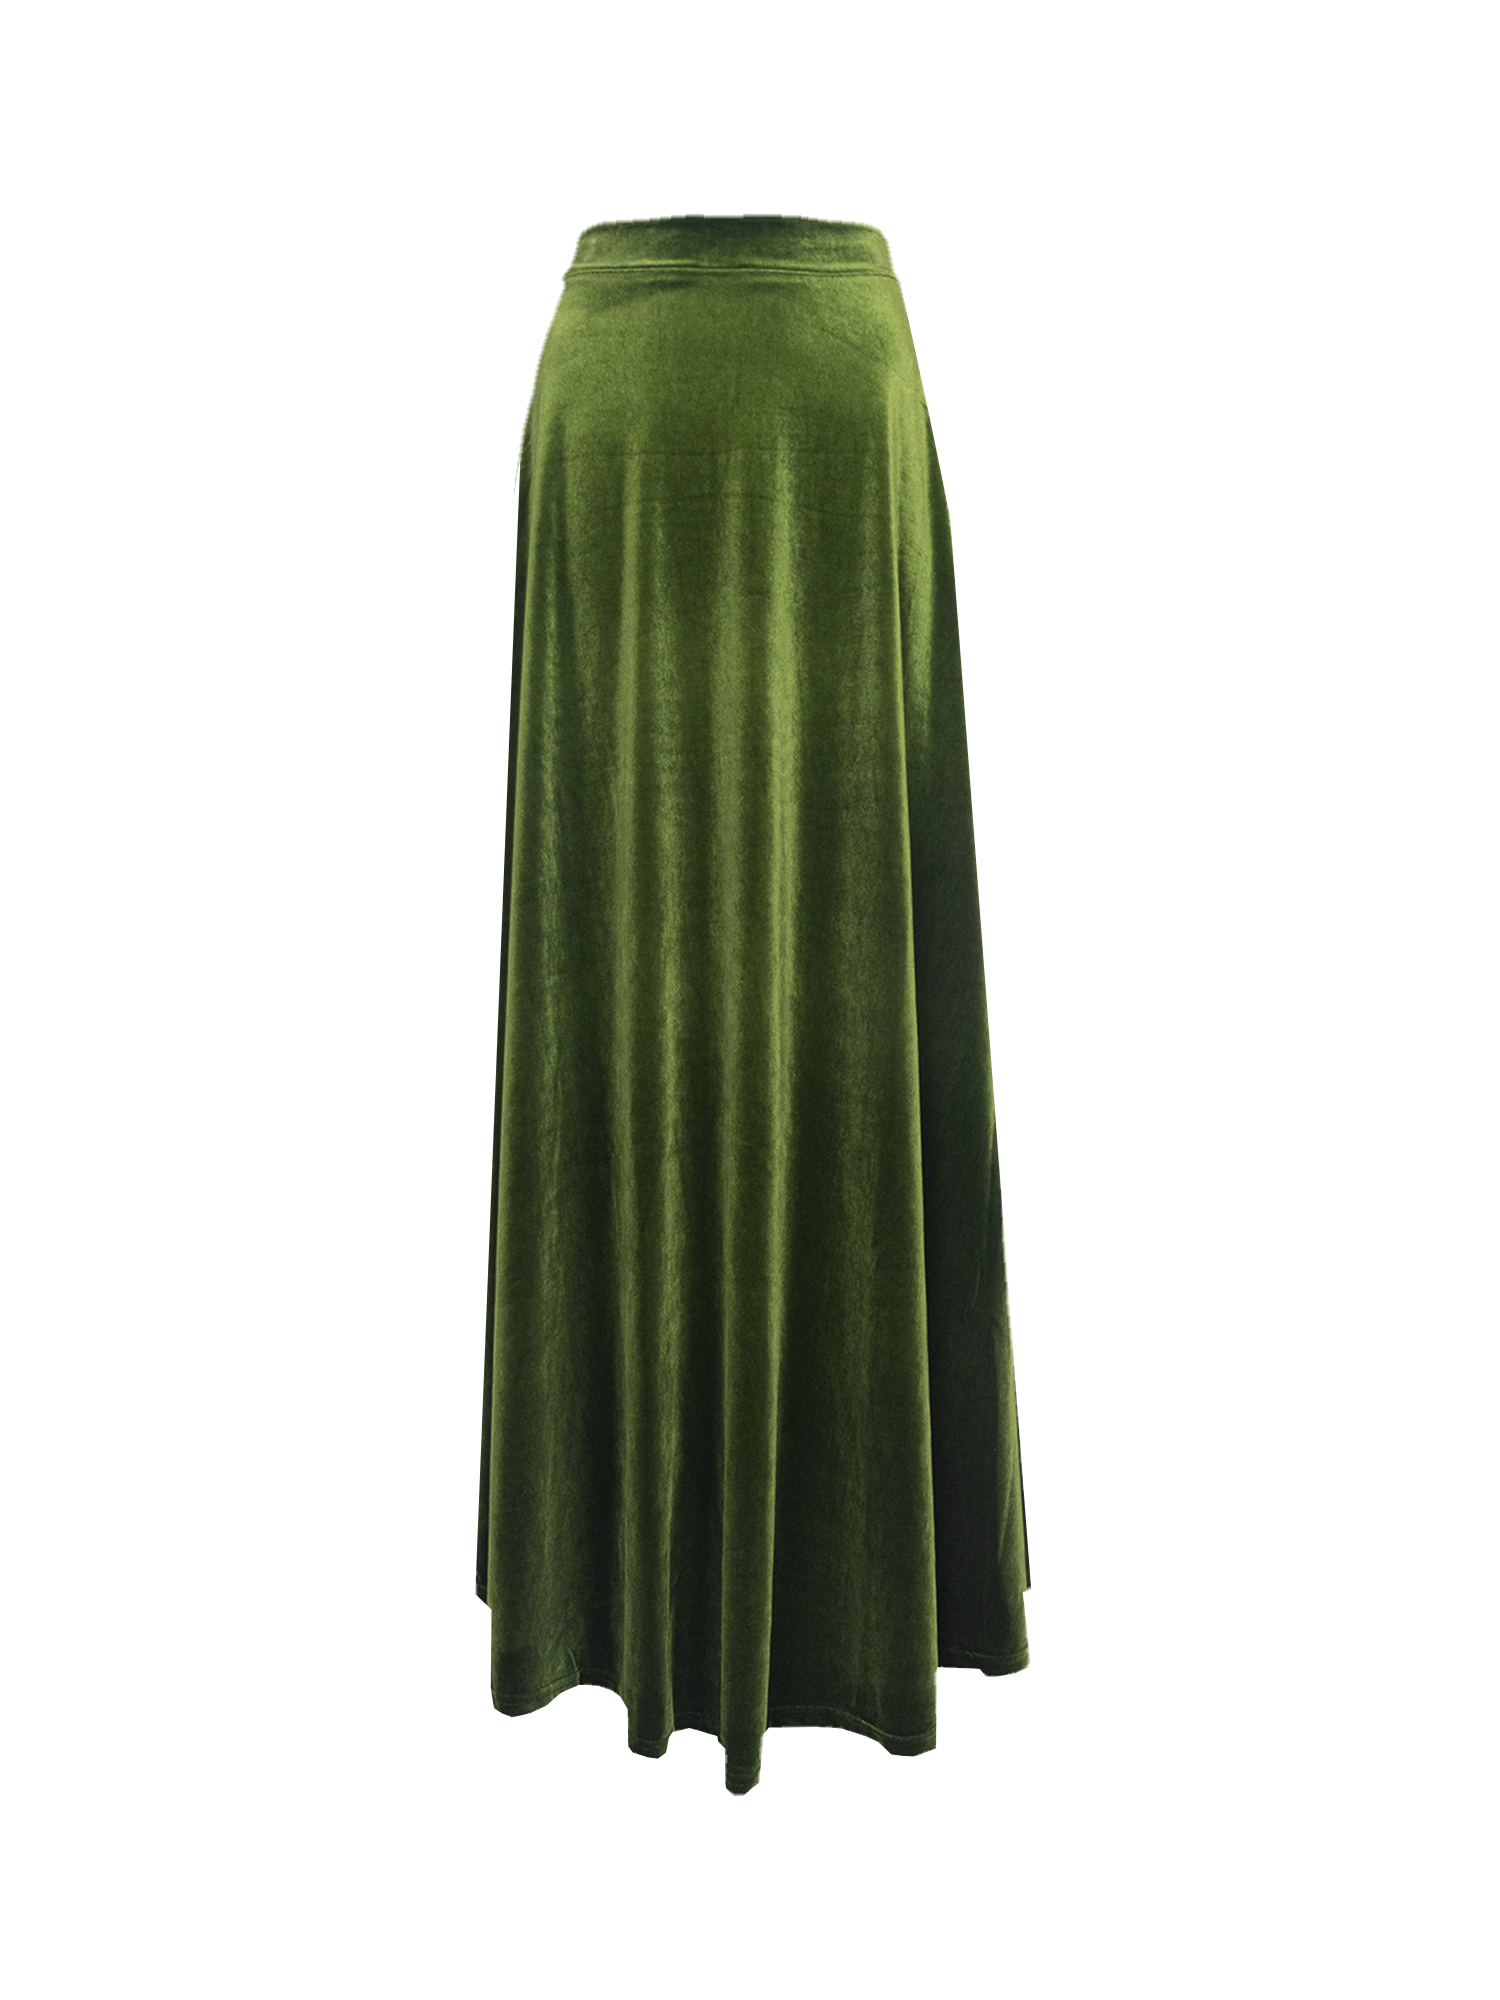 TOSCA - long skirt in green chenille